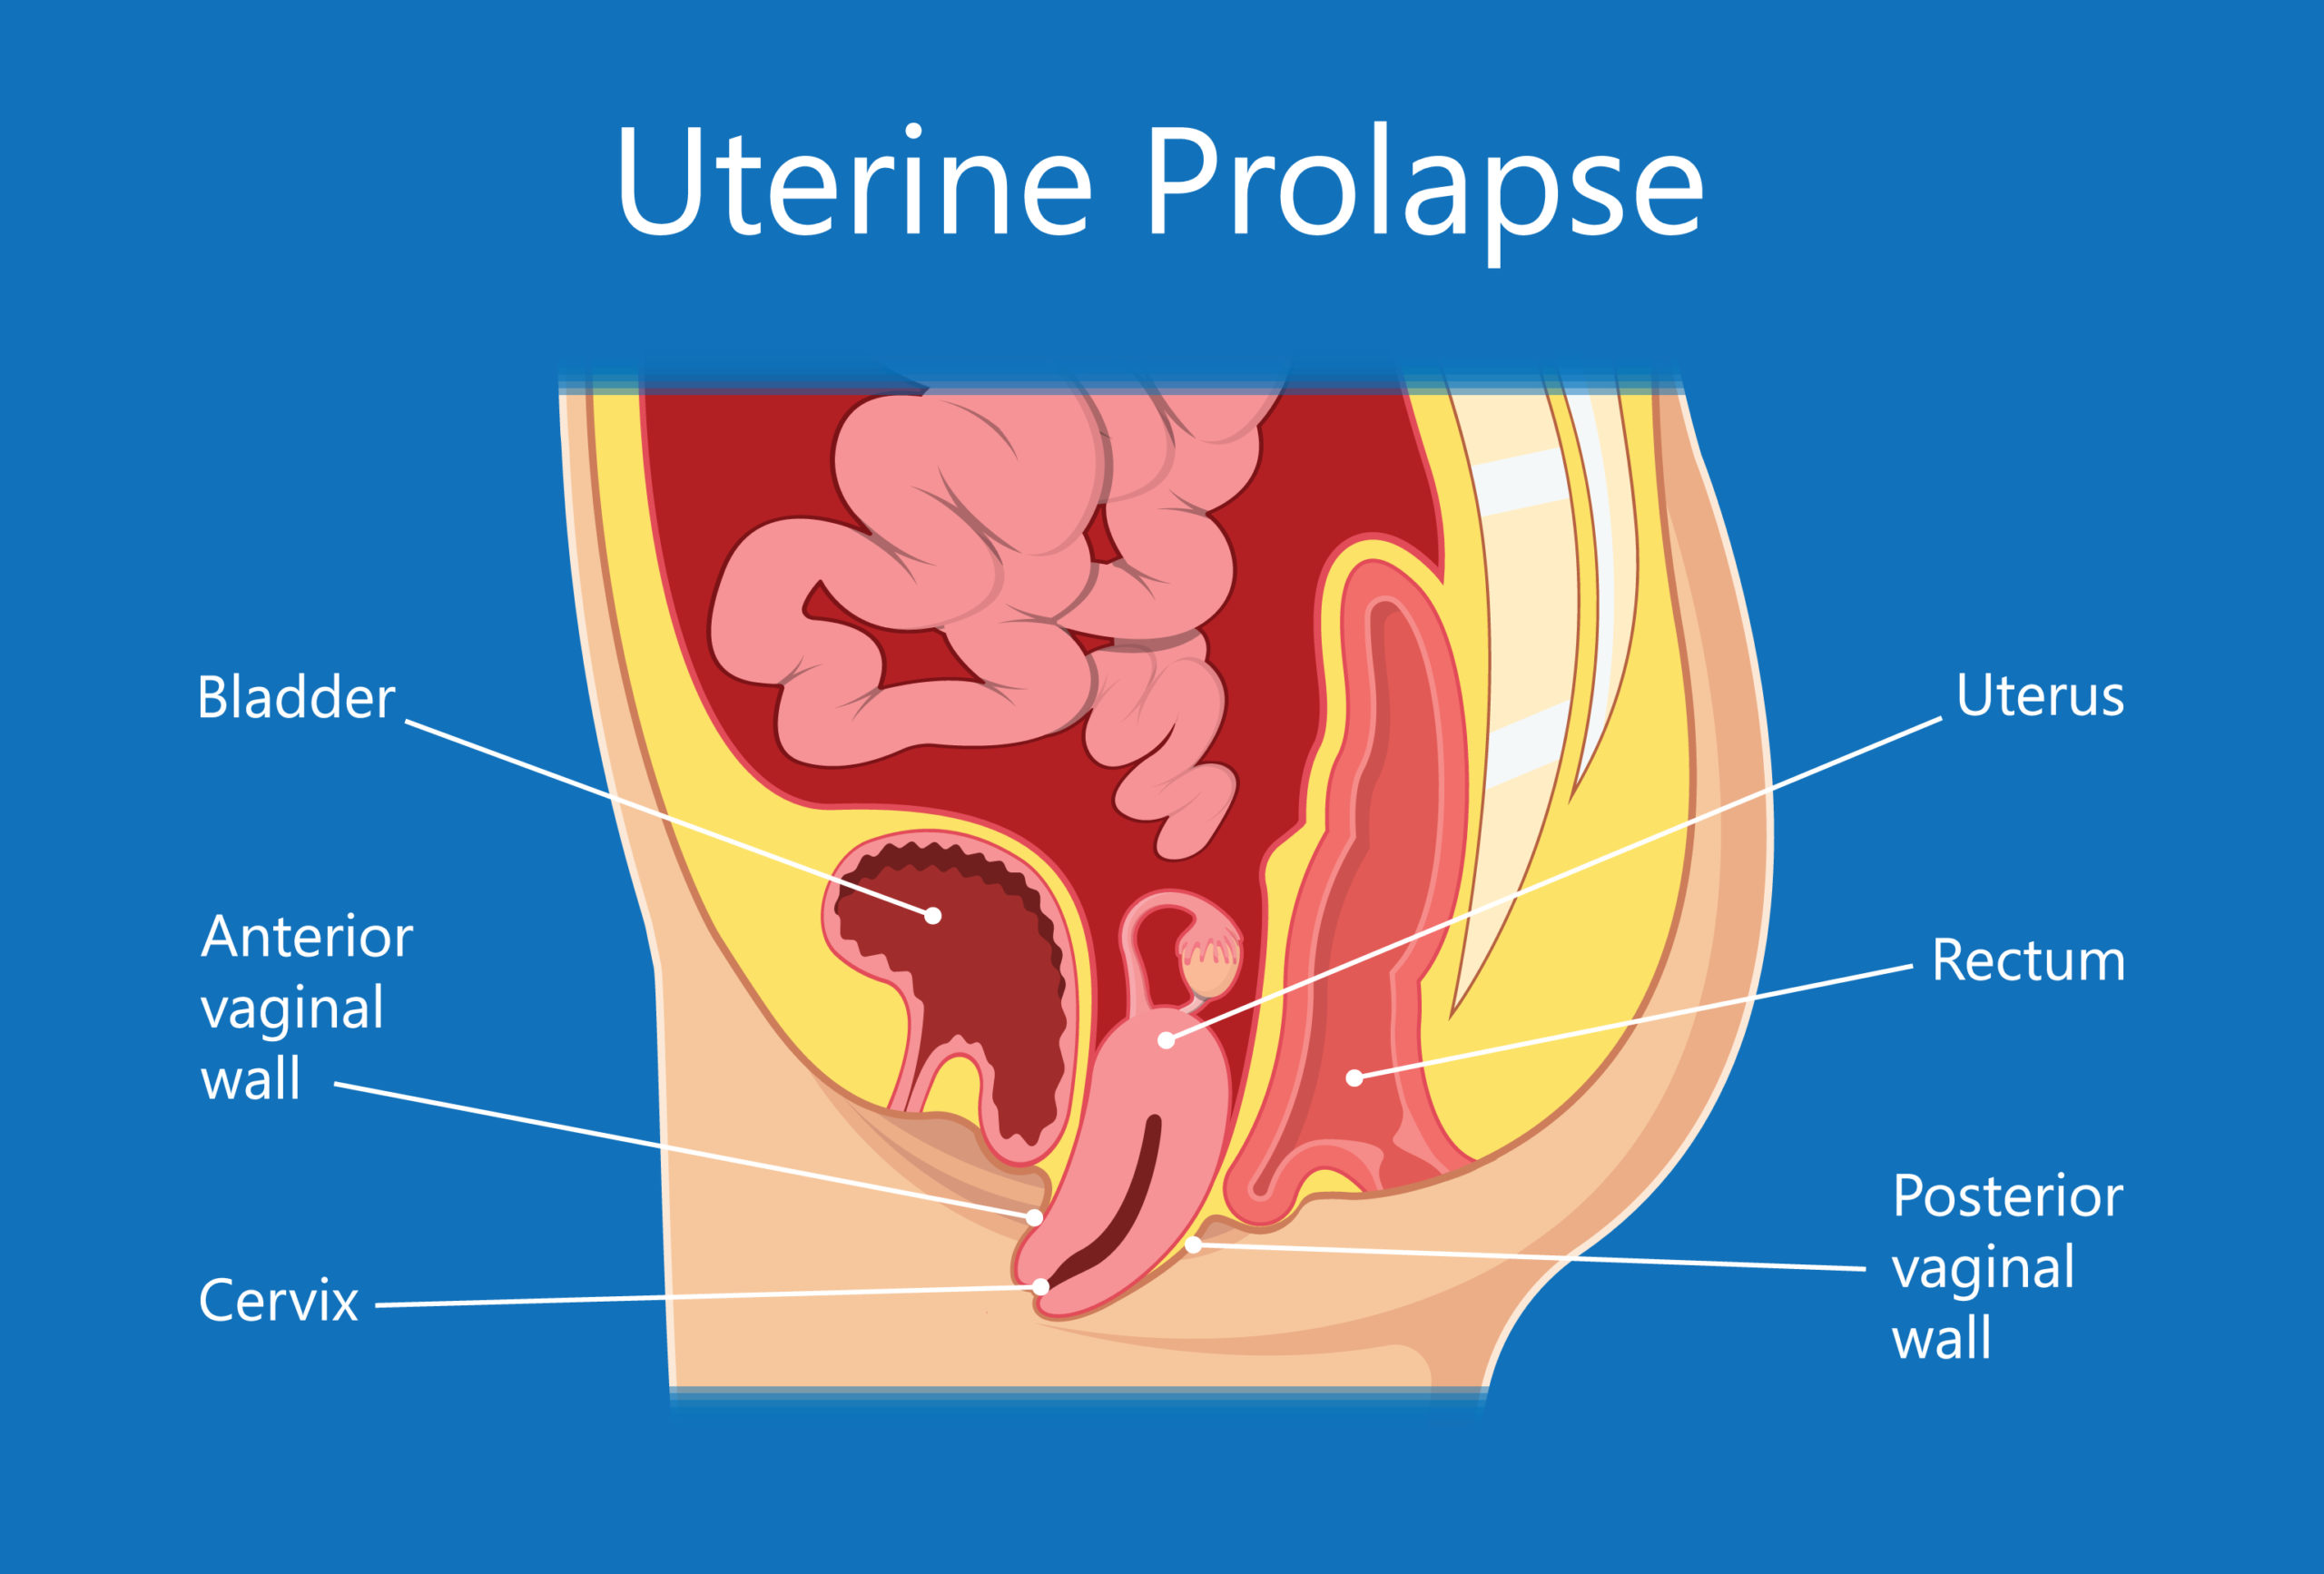 Uterine Prolapse - Symptoms, Causes, Prevention and Treatment